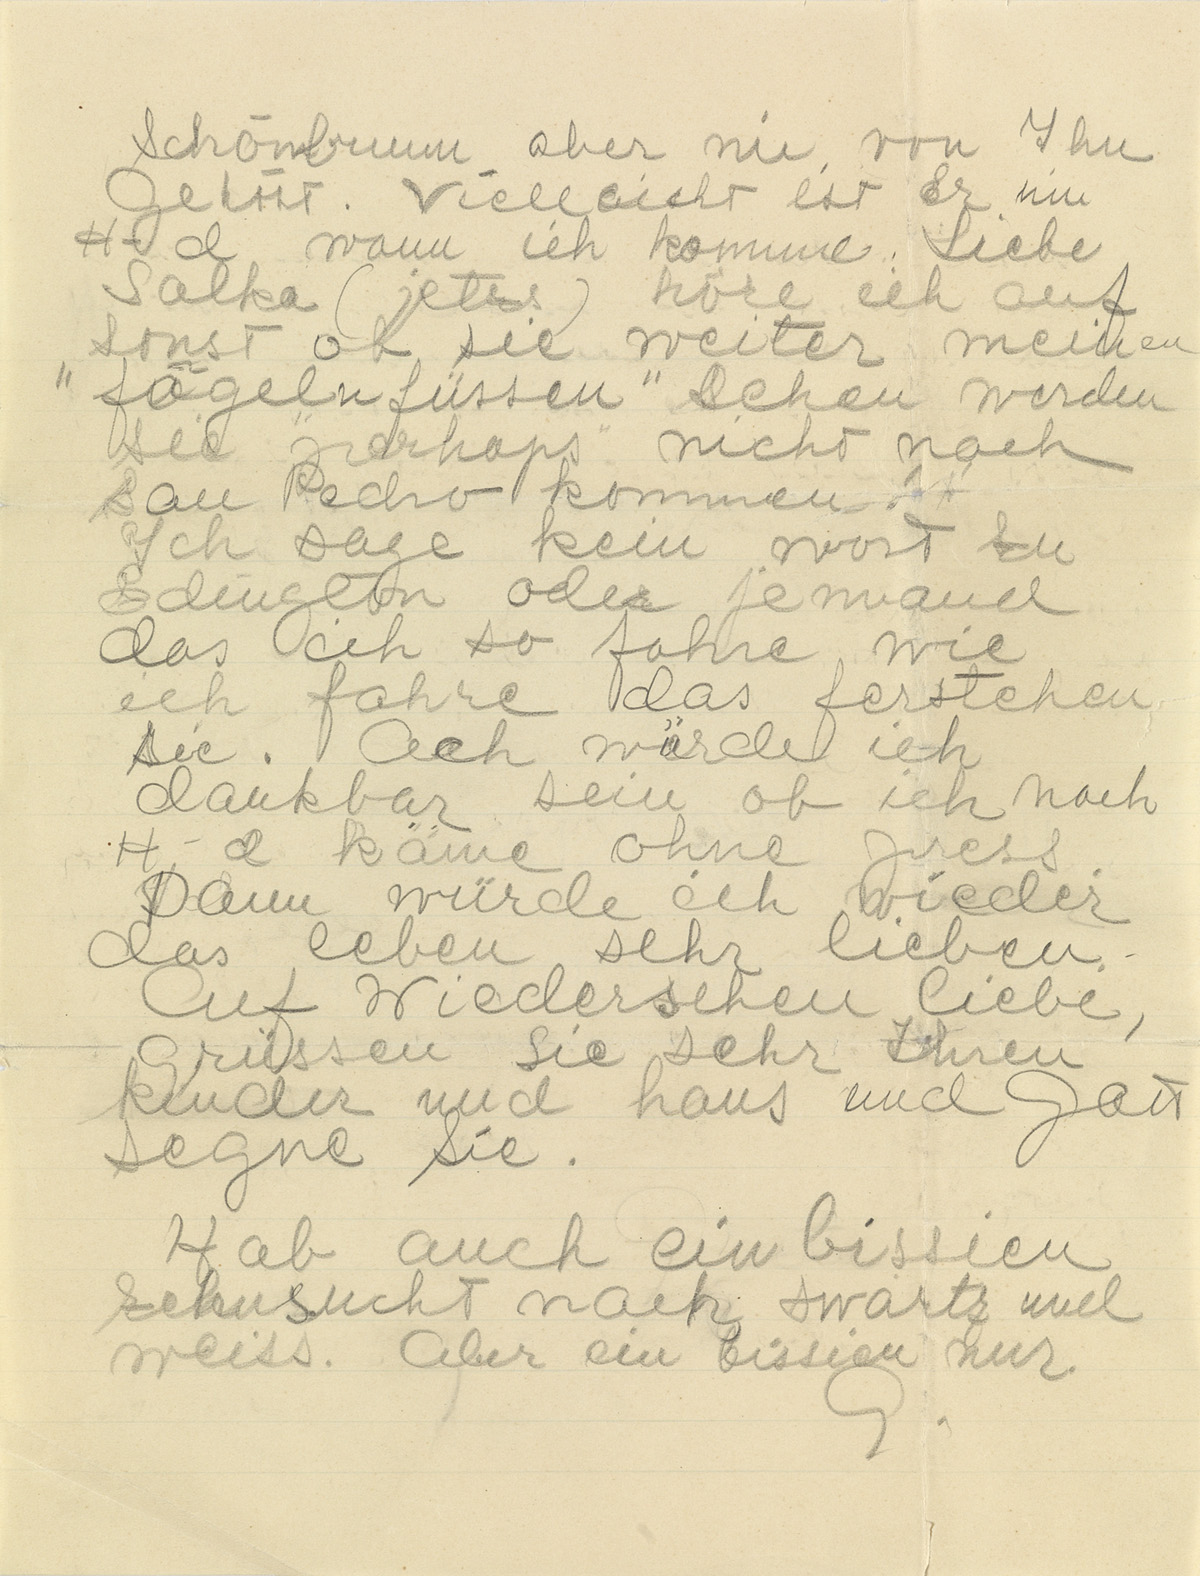 GARBO, GRETA. Archive of over 65 letters to her close friend Salka Viertel (Salka lilla, Salka Liebe, etc.),